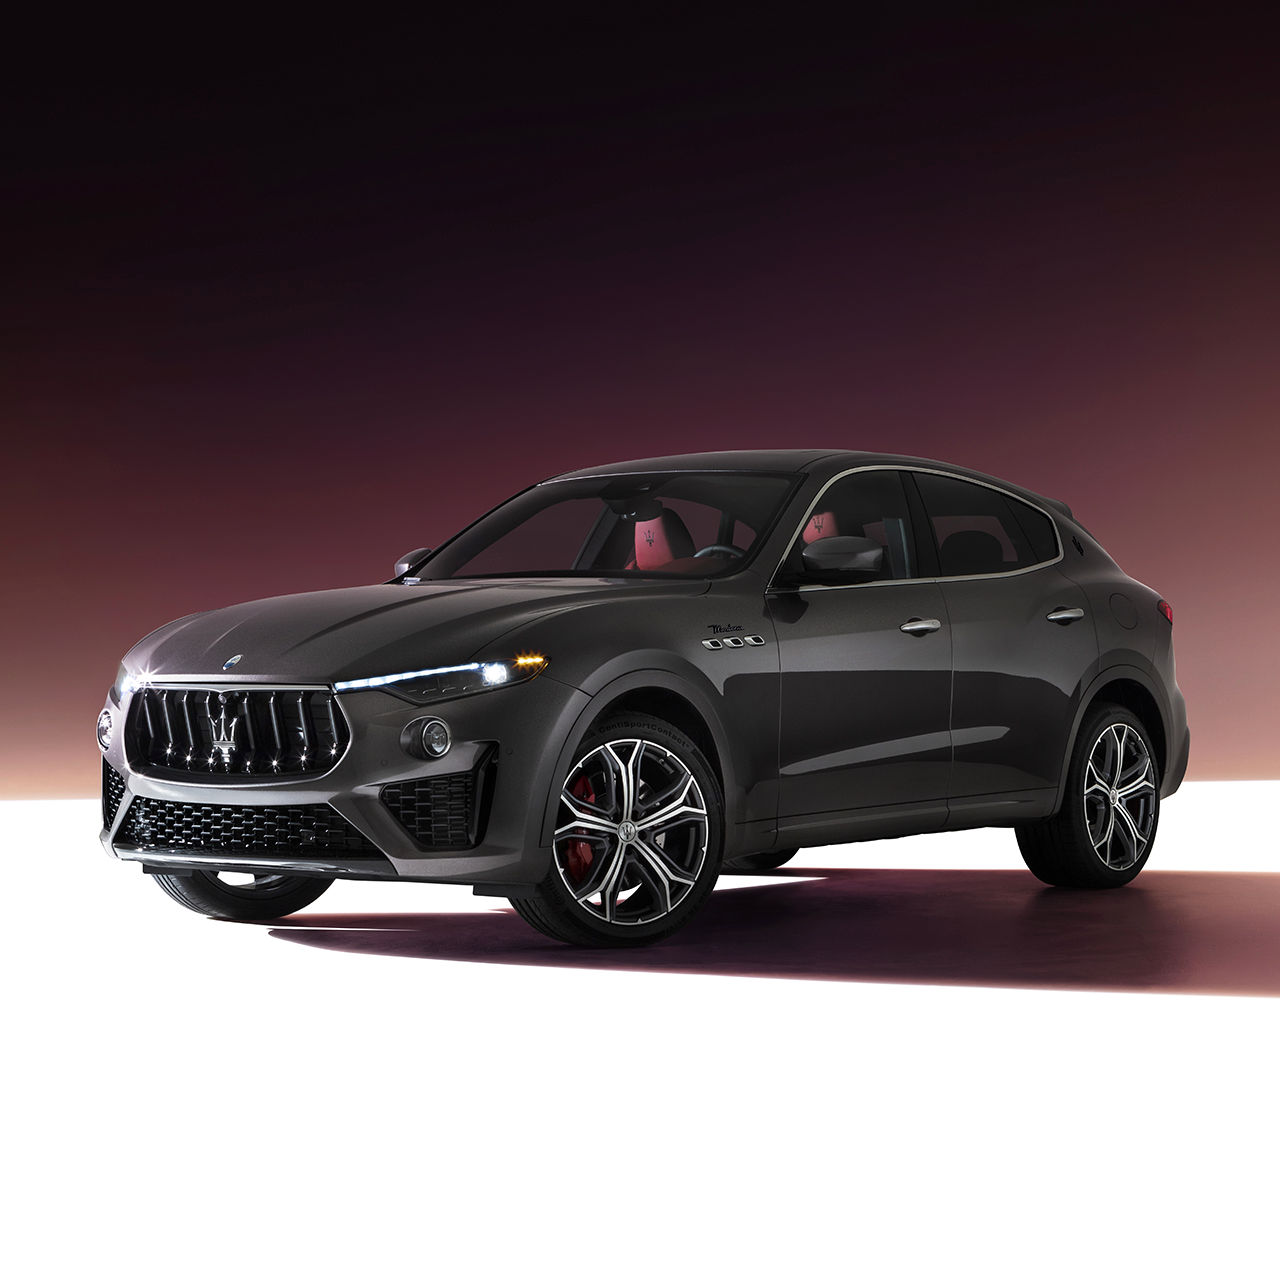 Maserati Models: SUVs, Sports Cars, and Sedans | Maserati USA